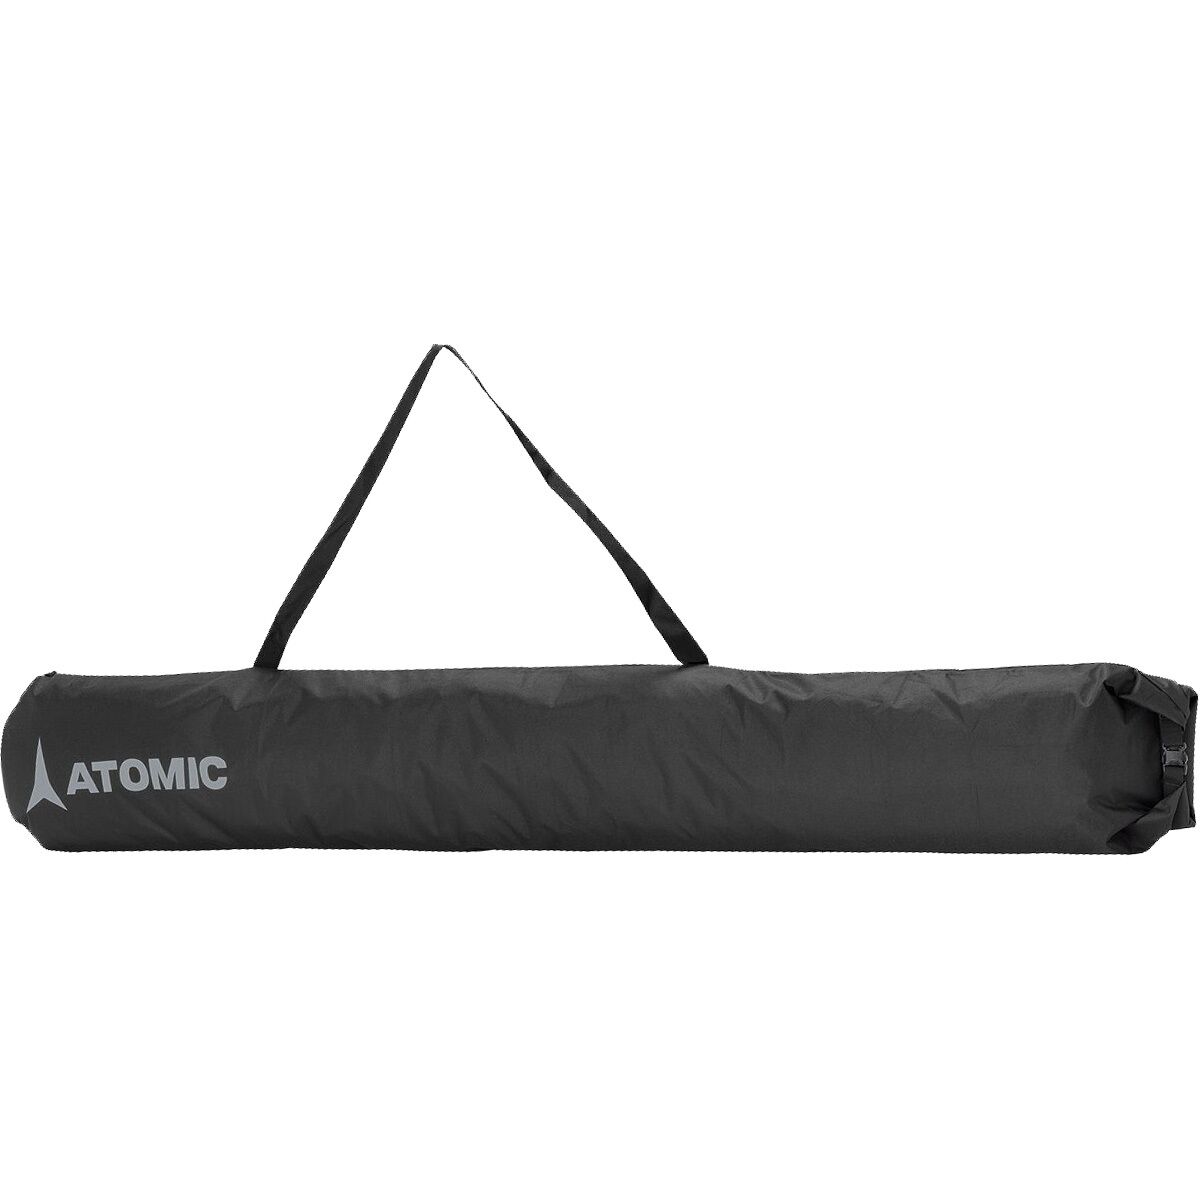 Atomic 205 A Sleeve Ski Bag